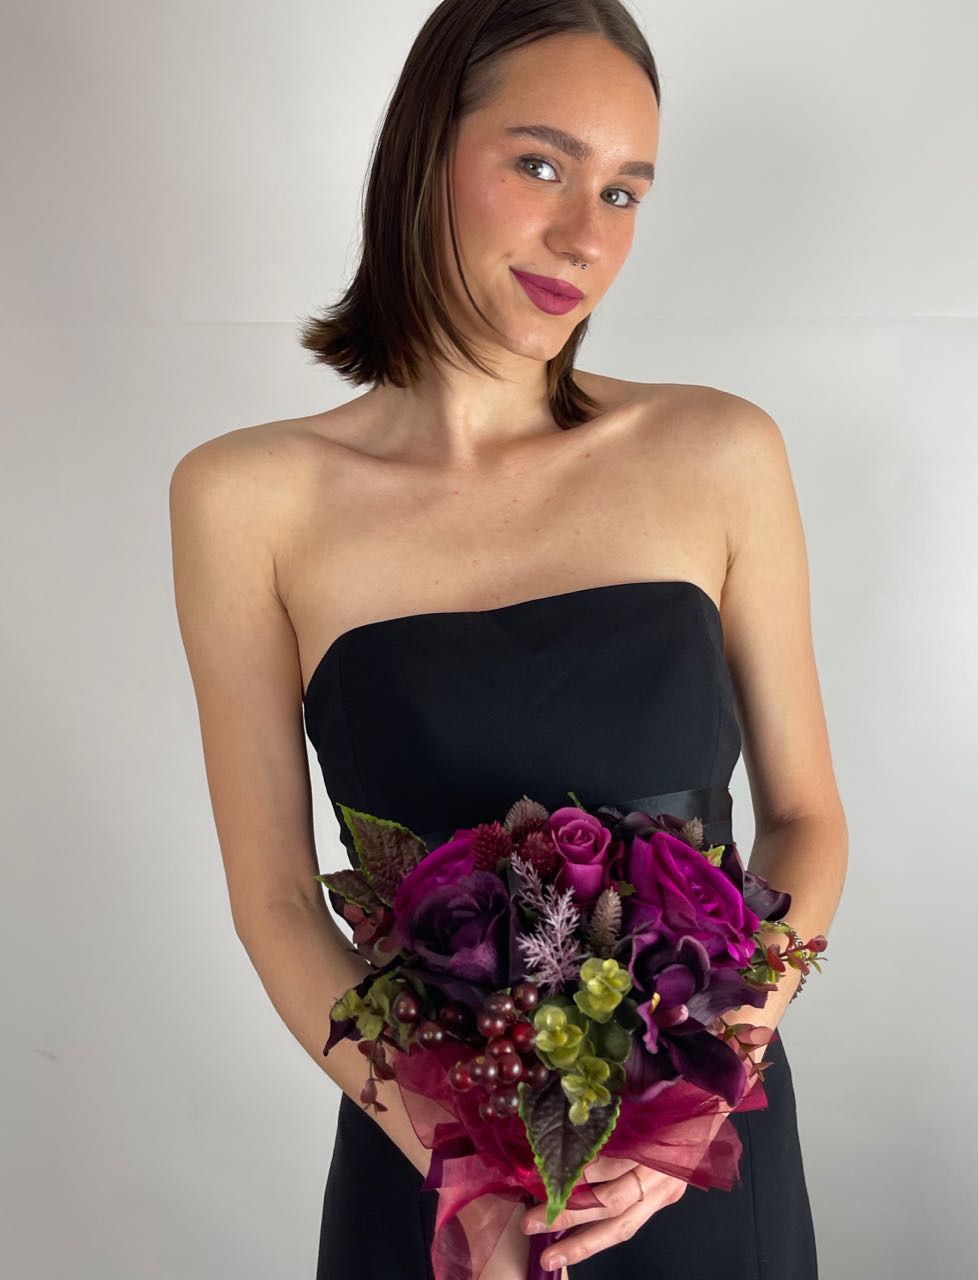 Bridesmaid Bouquet in Black Cherry